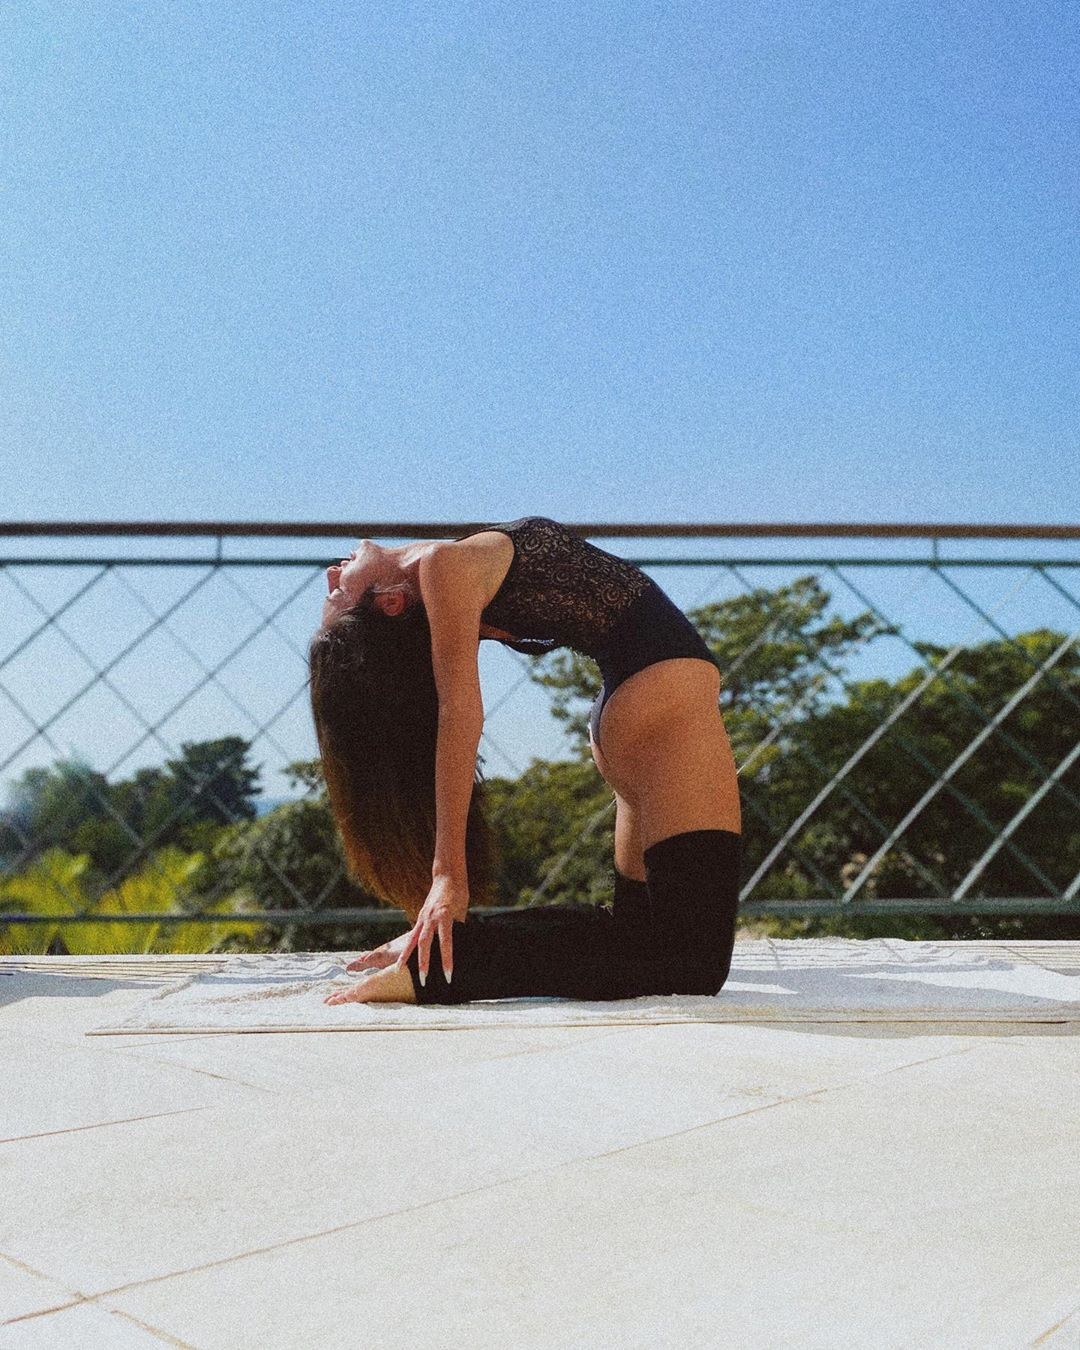 Instagram penelope yoga Penelope Disick’s